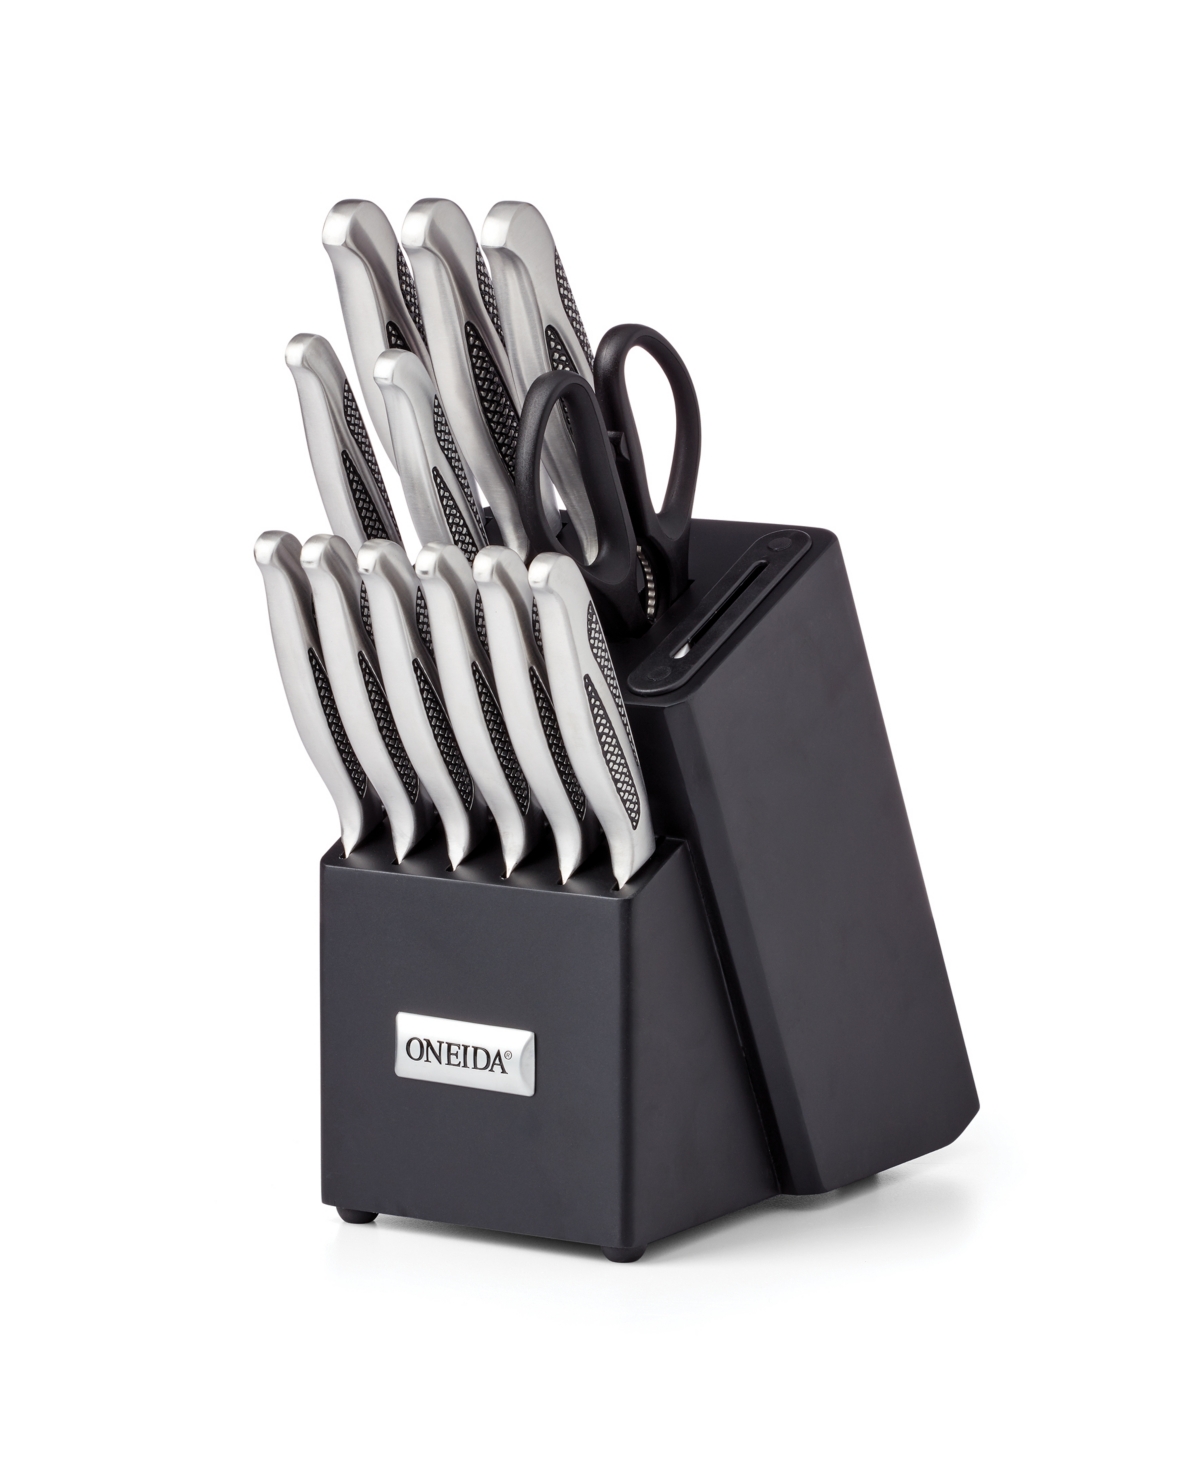 Oneida Stainless Steel 14 Piece Cutlery Block With Built-in Sharpener Set